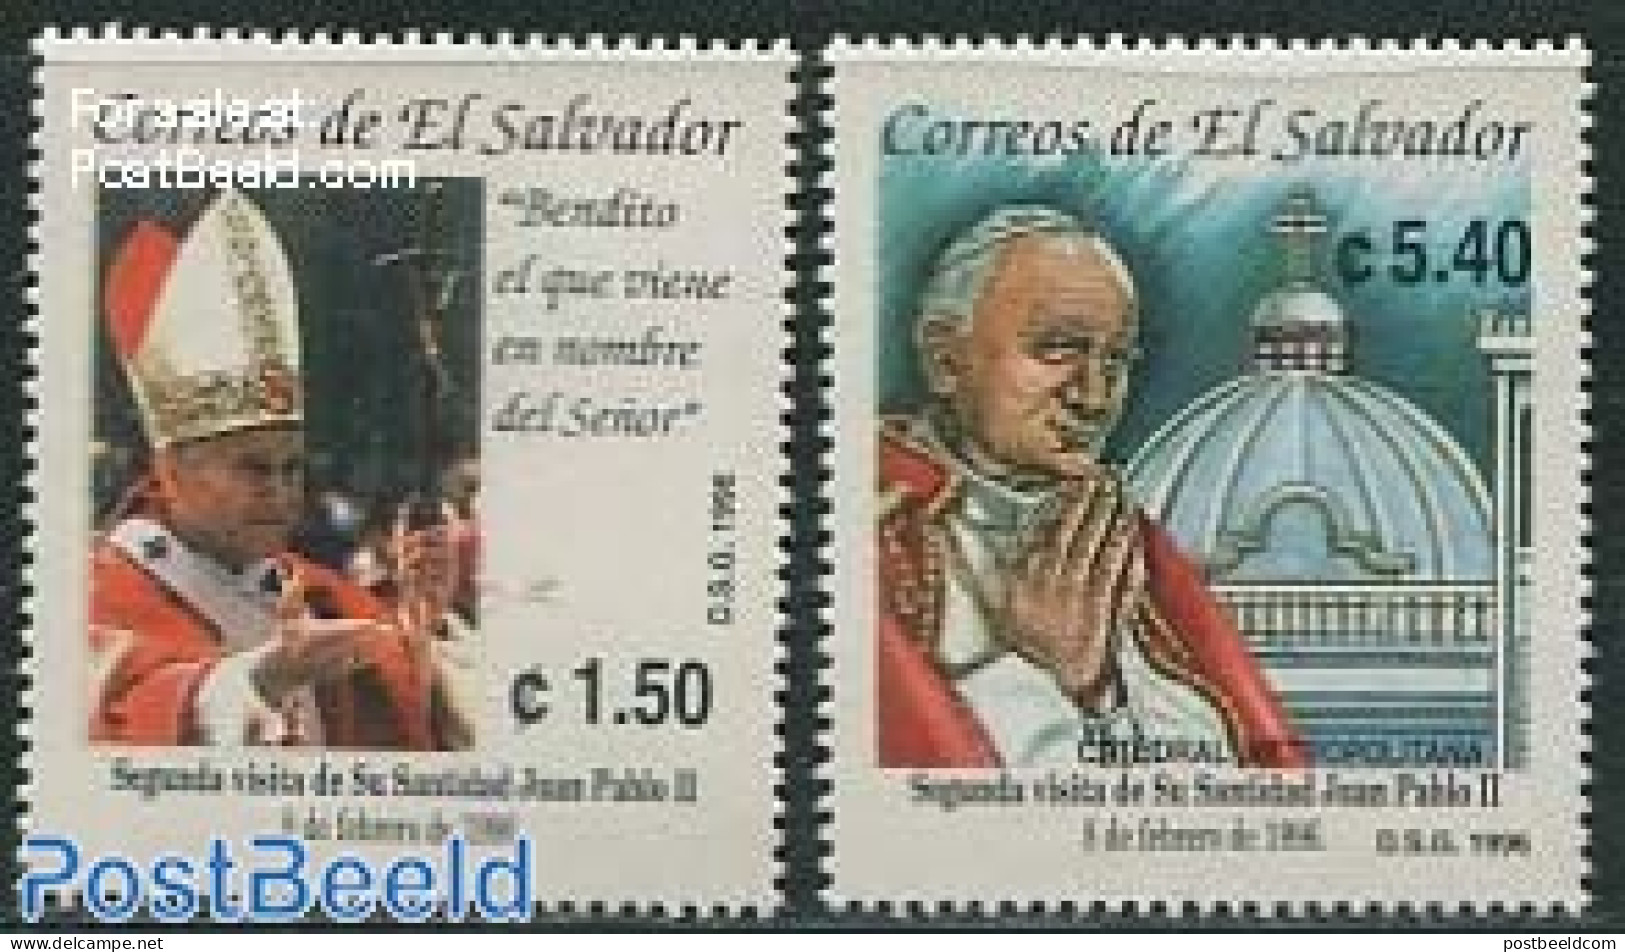 El Salvador 1996 Popes Visit 2v, Mint NH, Religion - Pope - Religion - Popes